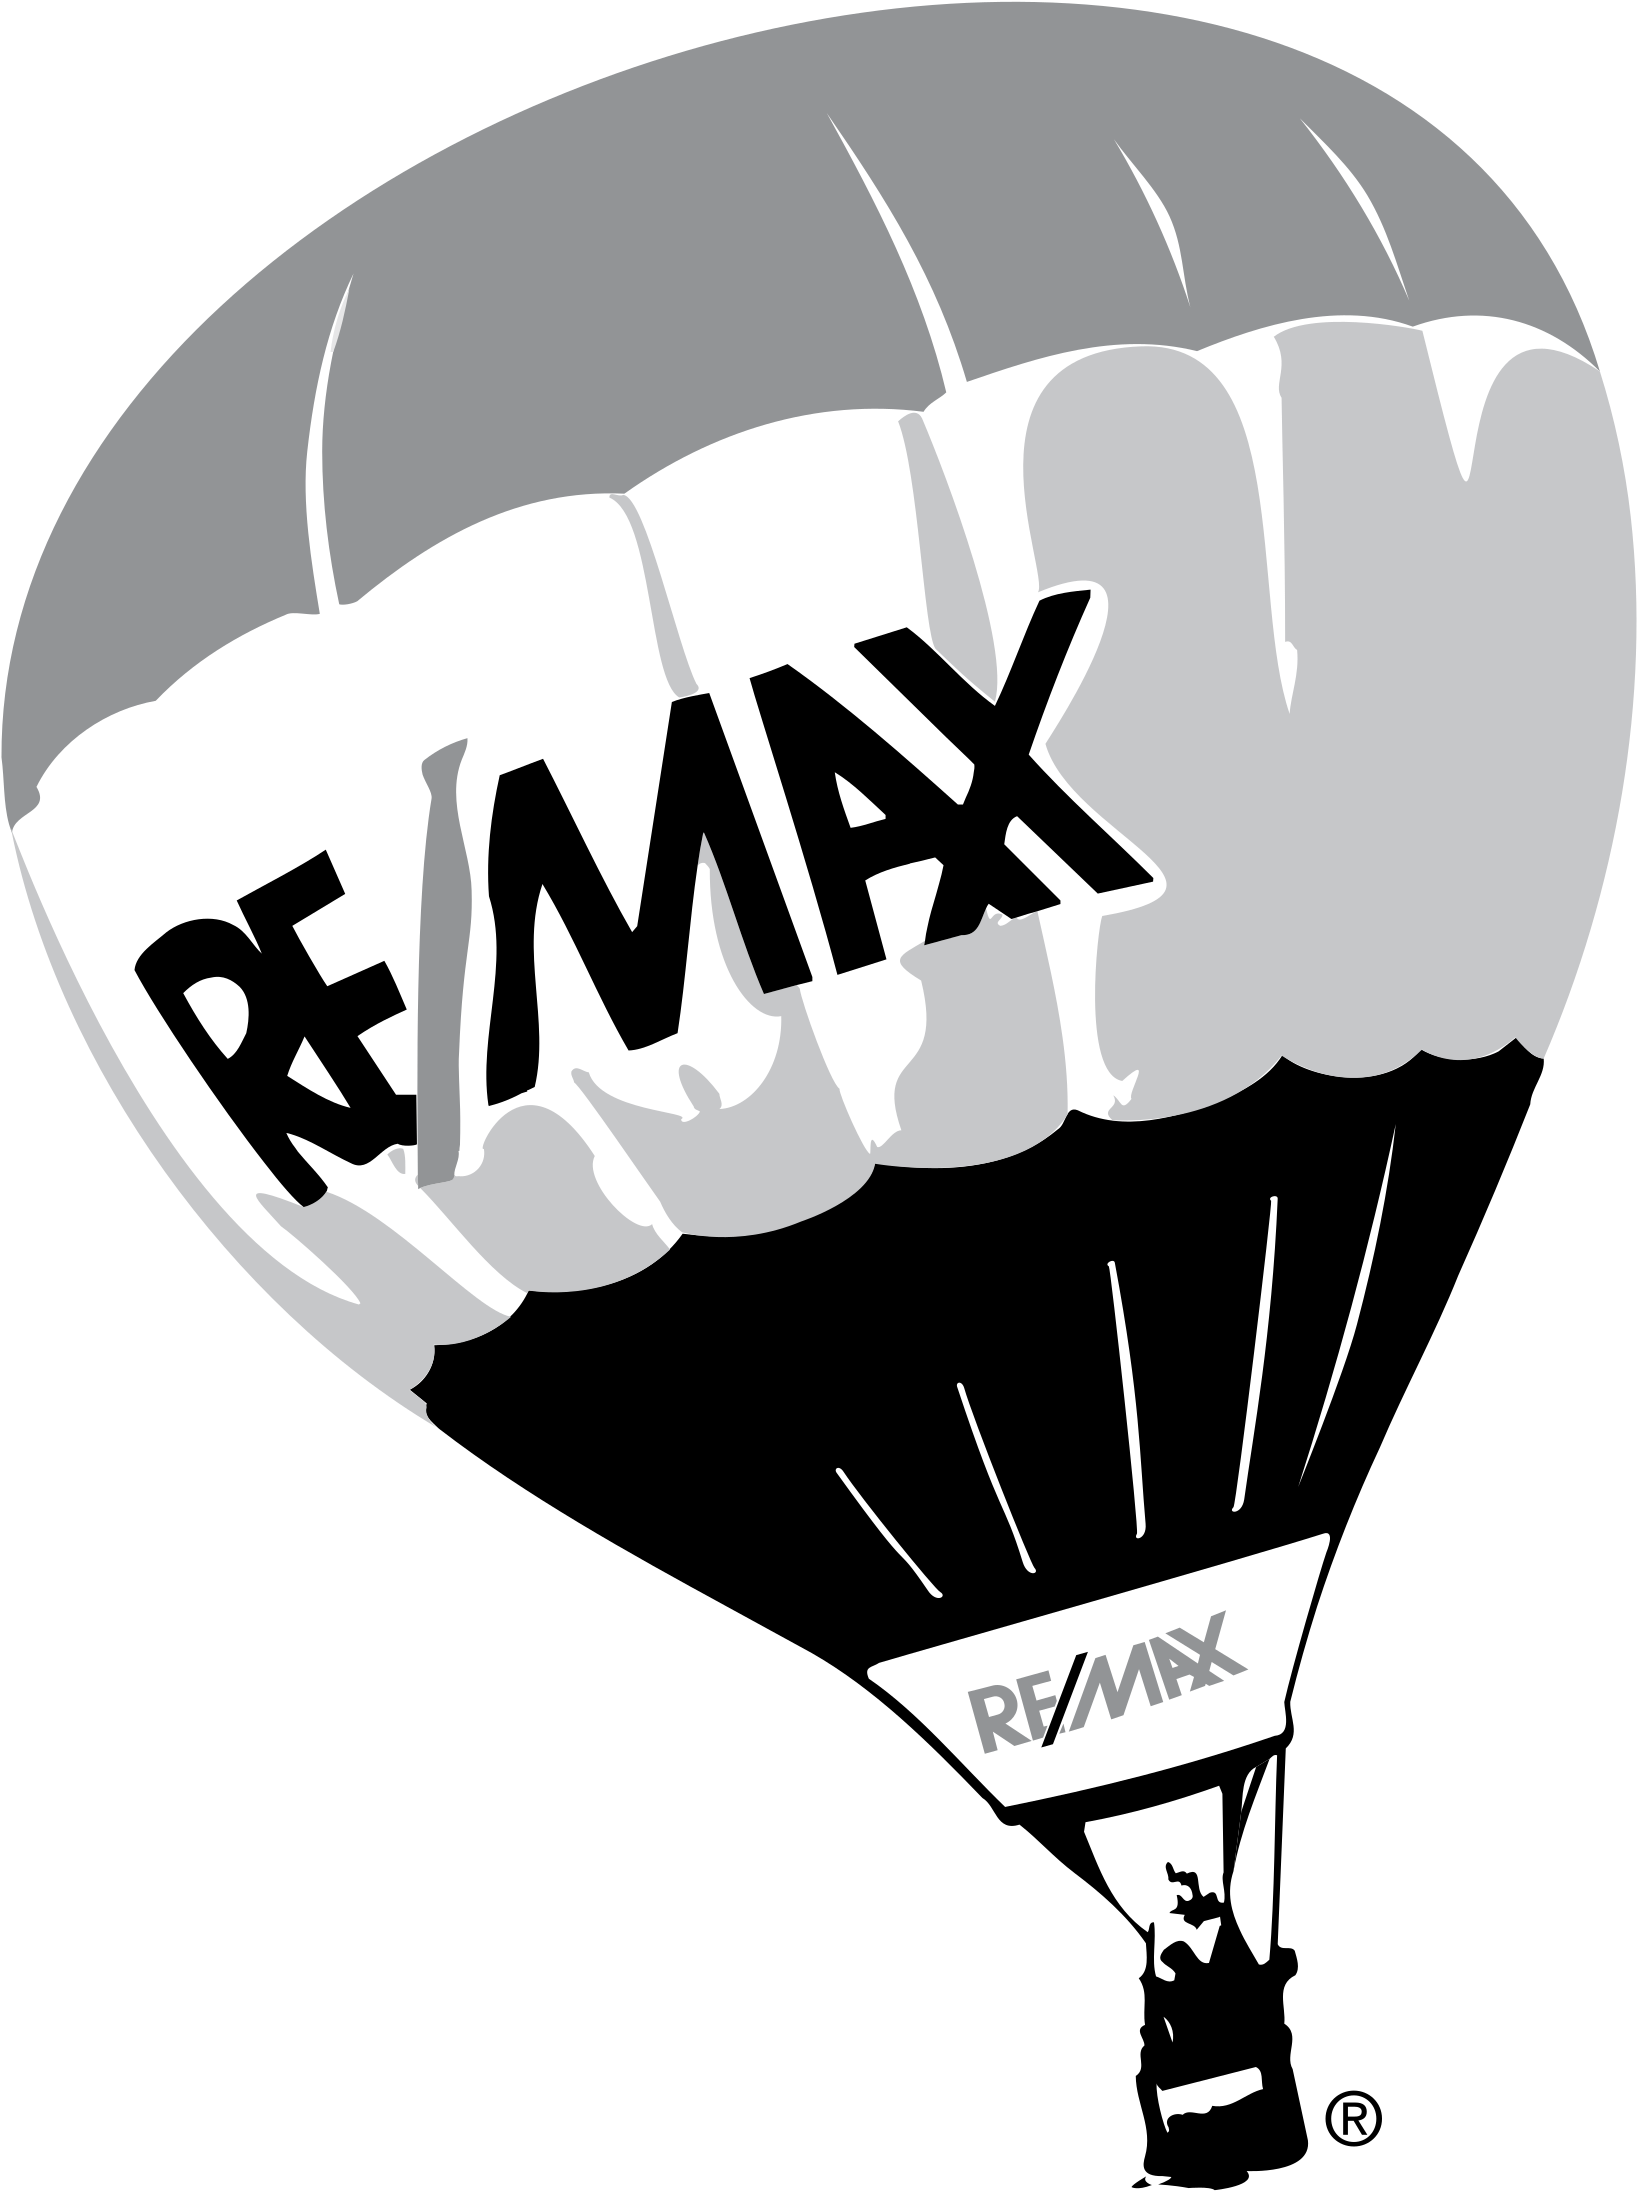 Re Max Logo Png Transparent - Remax Balloon Clip Art (2400x2400), Png Download